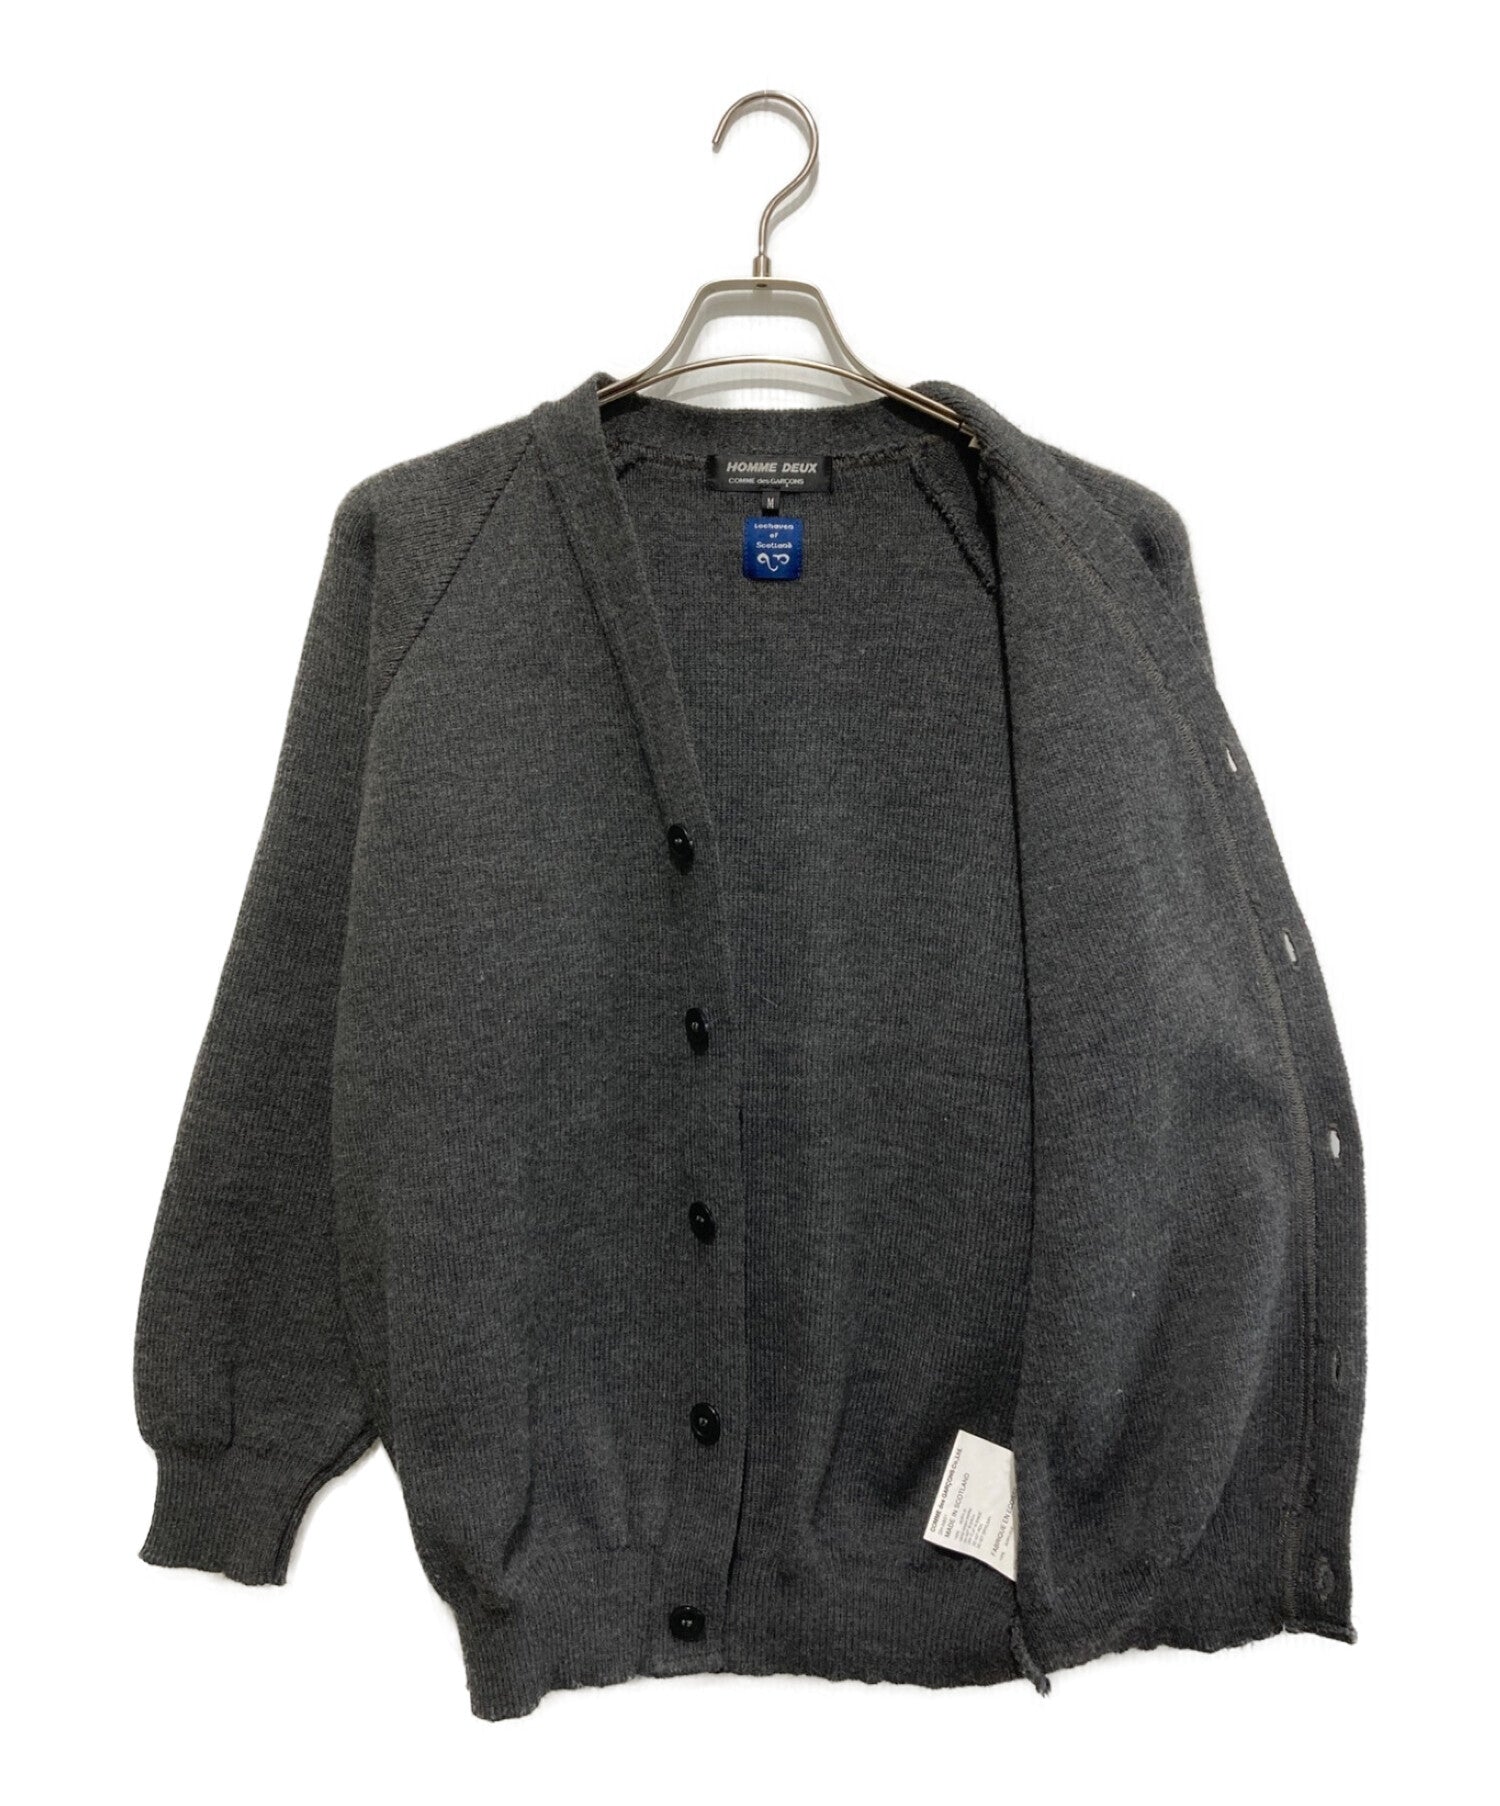 COMME des GARCONS HOMME DEUX V-Neck Knit Cardigan / Knitwear / Sweater  DH-N501